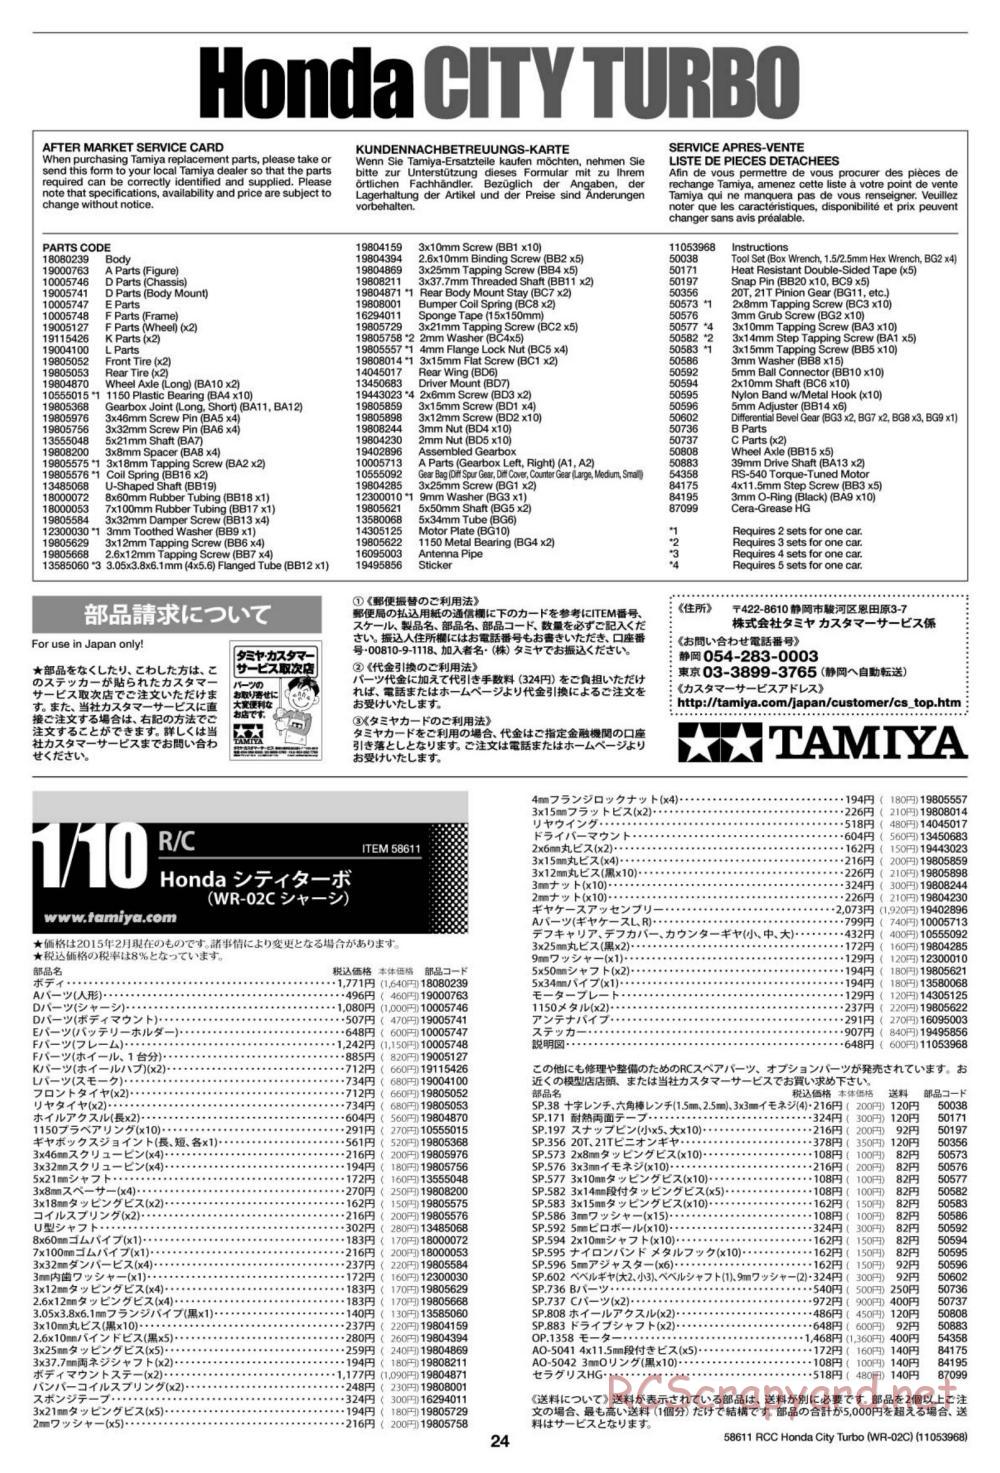 Tamiya - WR-02C Chassis - Manual - Page 24